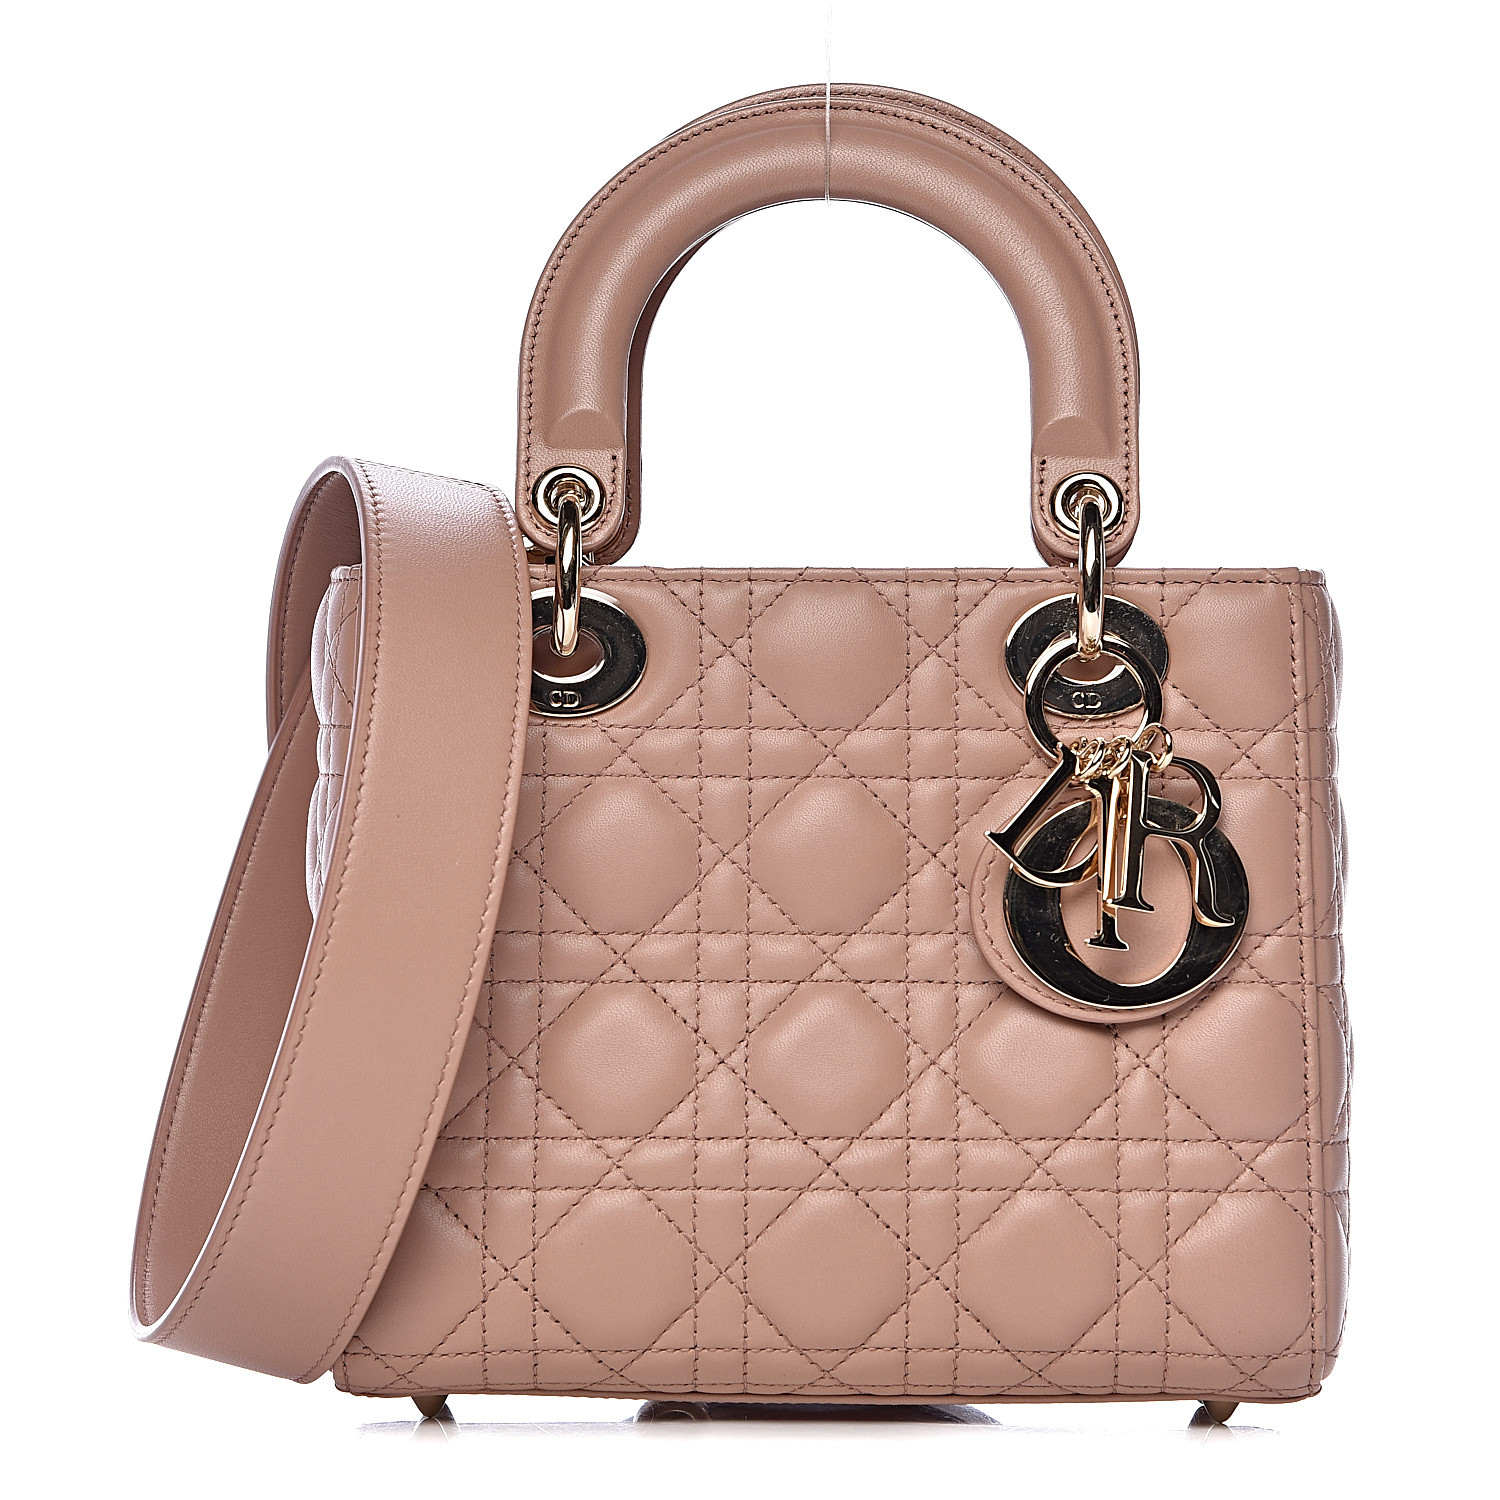 Lady Dior Handbag Pinkfong | semashow.com